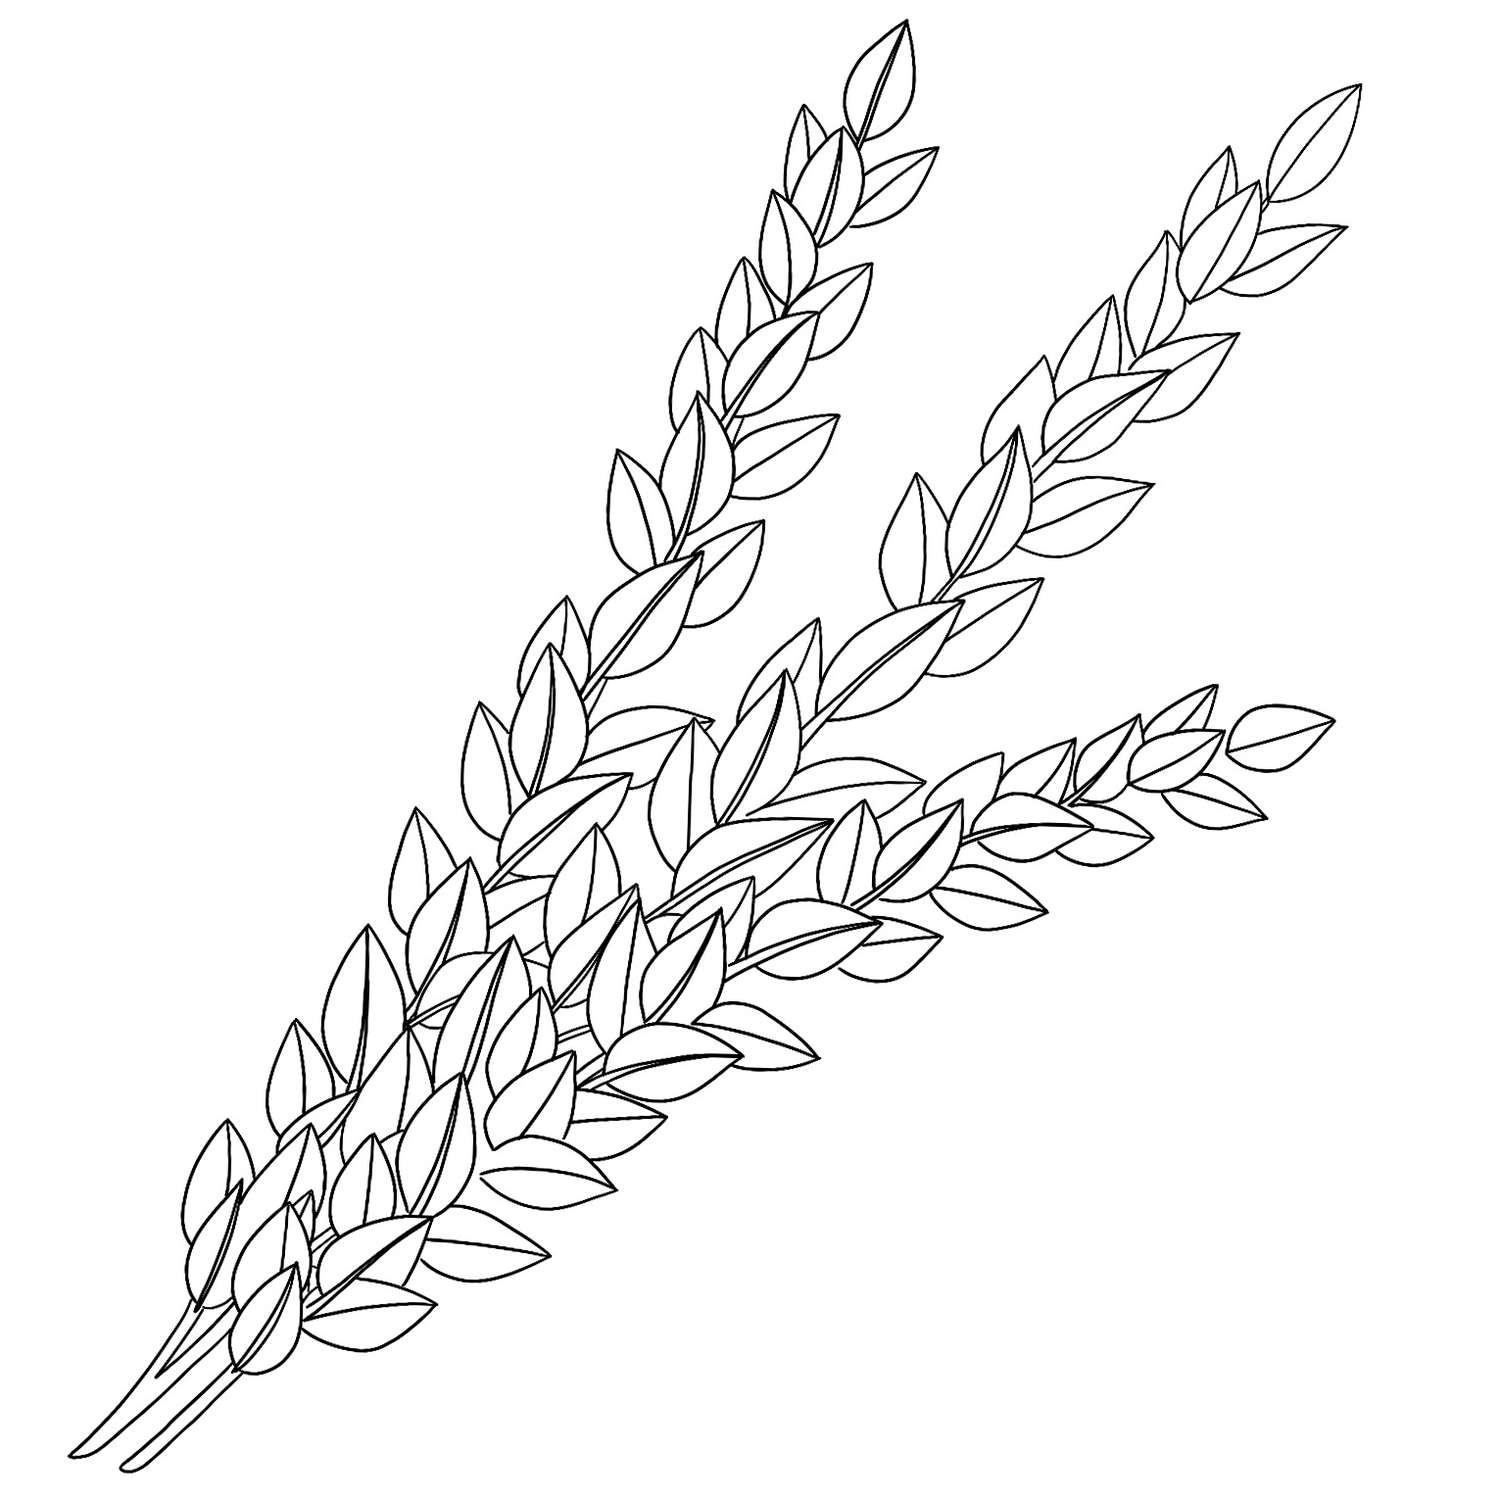 myrtle evergreen cutting illustration